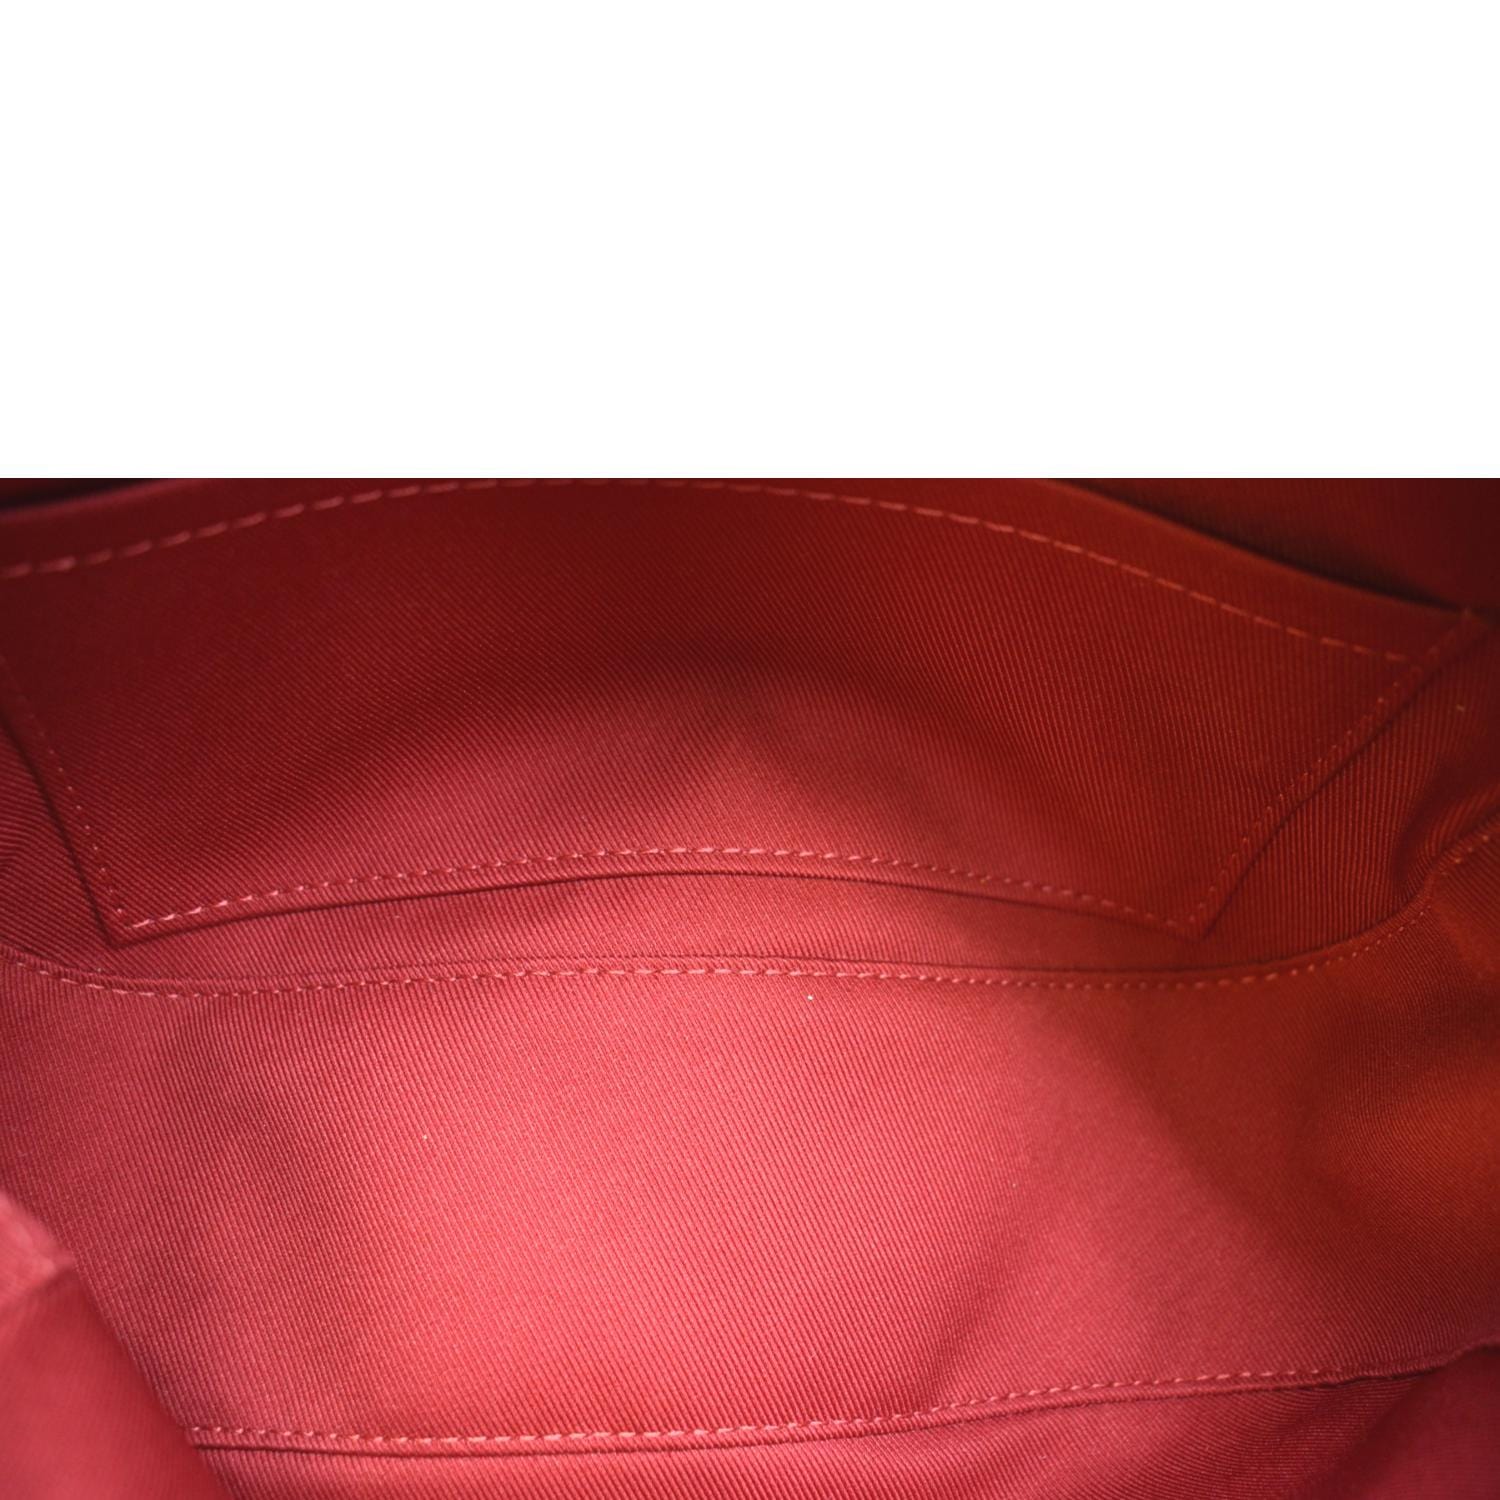 Louis Vuitton Saintonge Handbag Monogram Canvas with Leather Brown 236566122